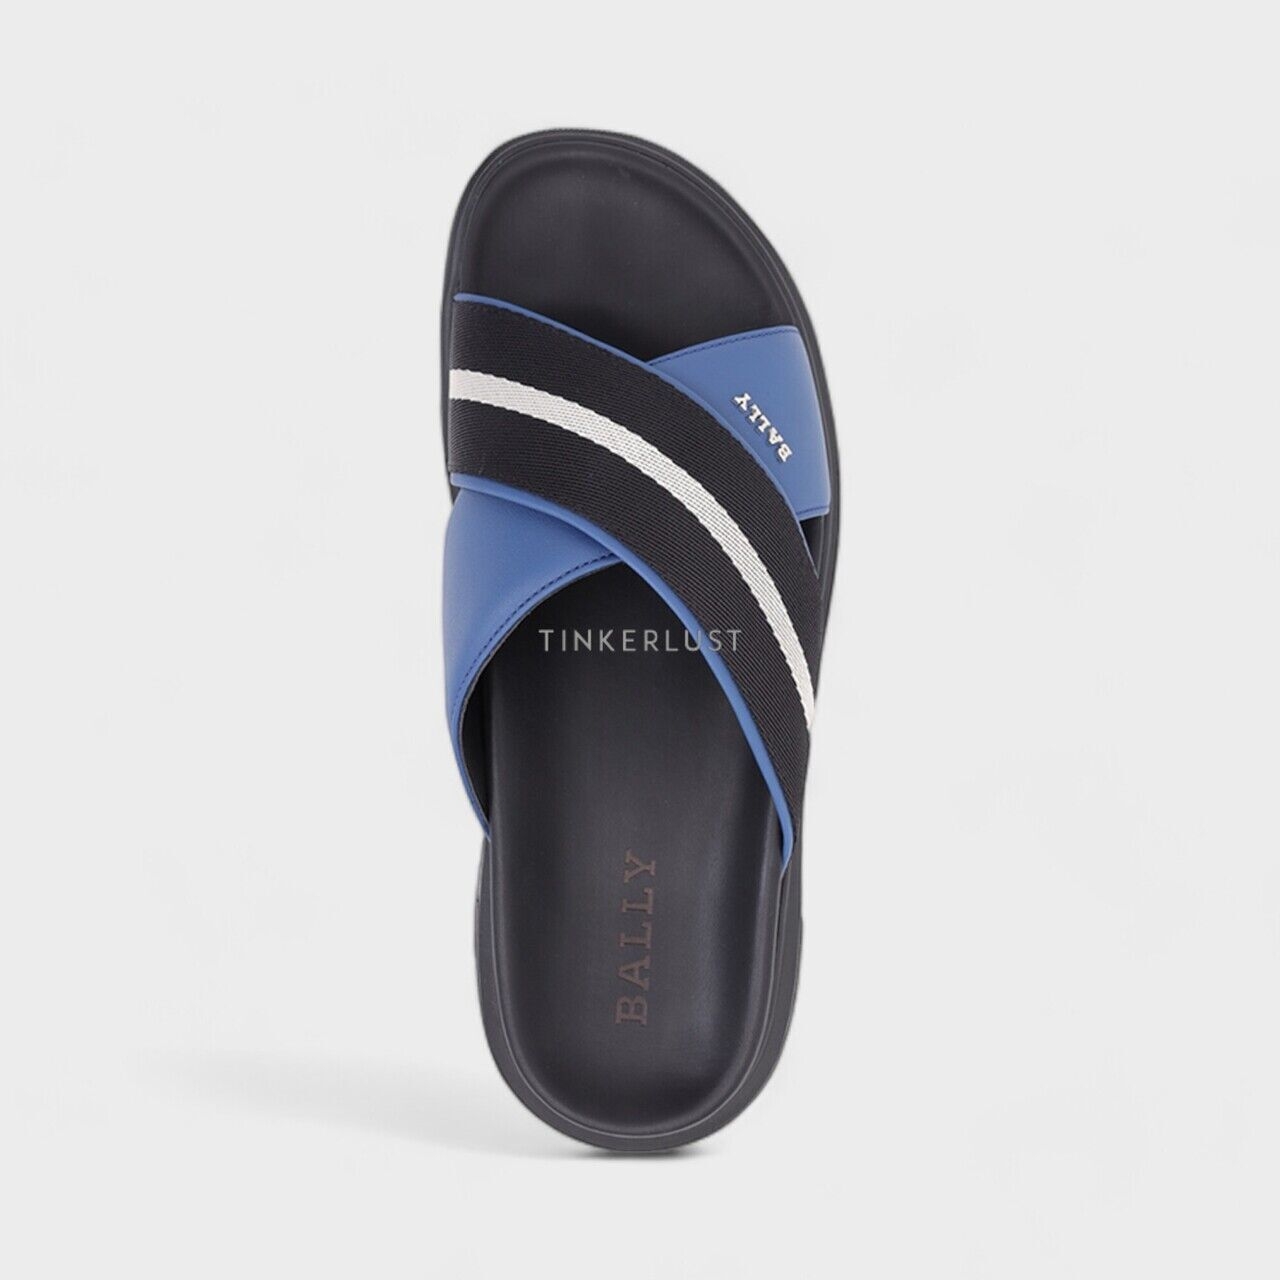 Bally Men Jake Crossover Sandals in Black/Blue Neon 